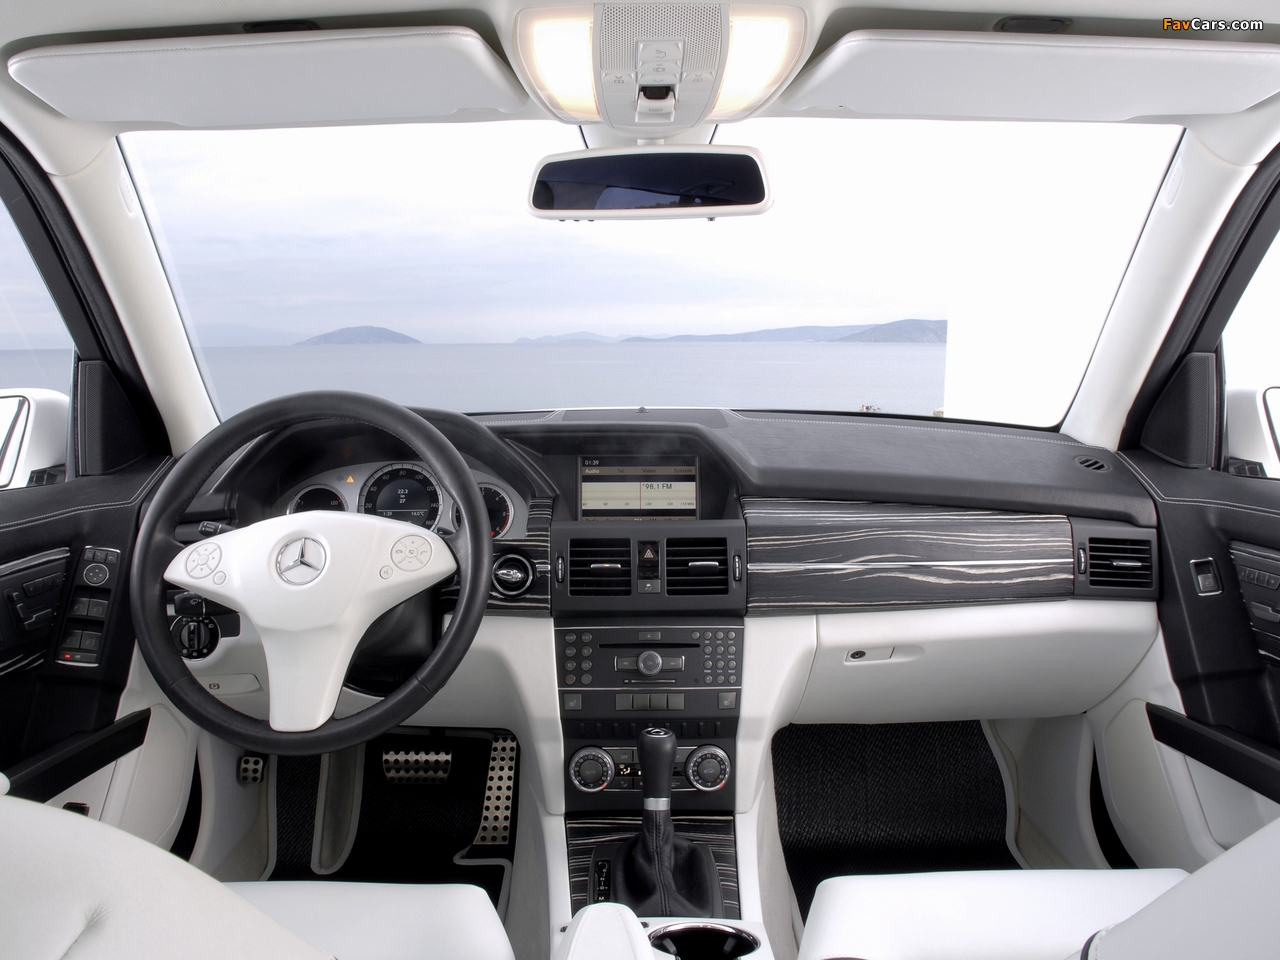 Mercedes-Benz Vision GLK Freeside Concept (X204) 2008 images (1280 x 960)